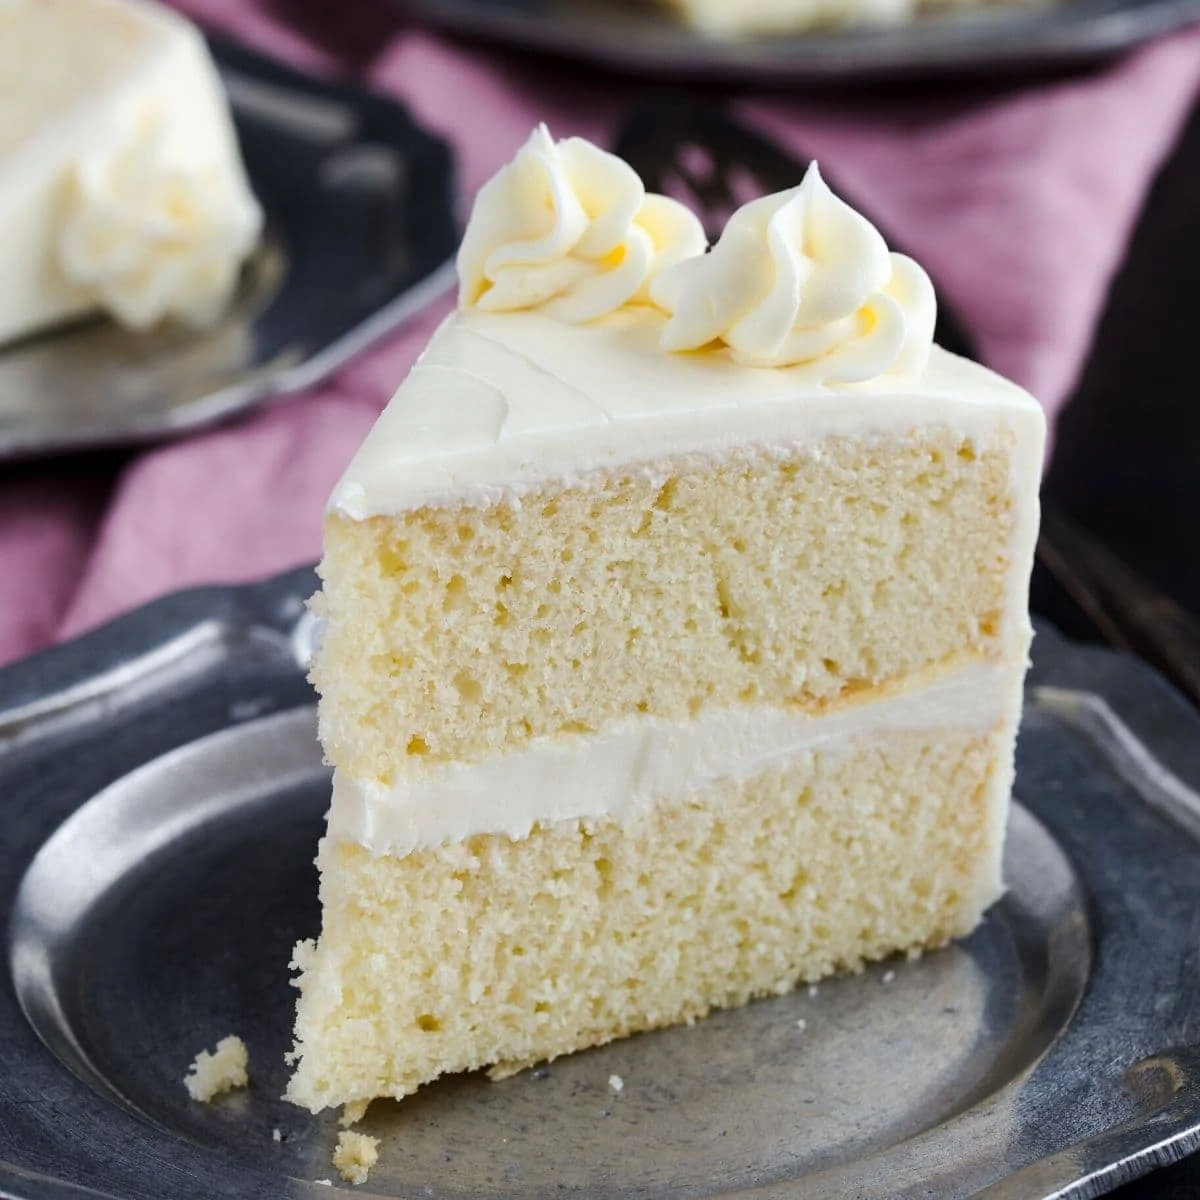 How to Make a Basic Vanilla Cake